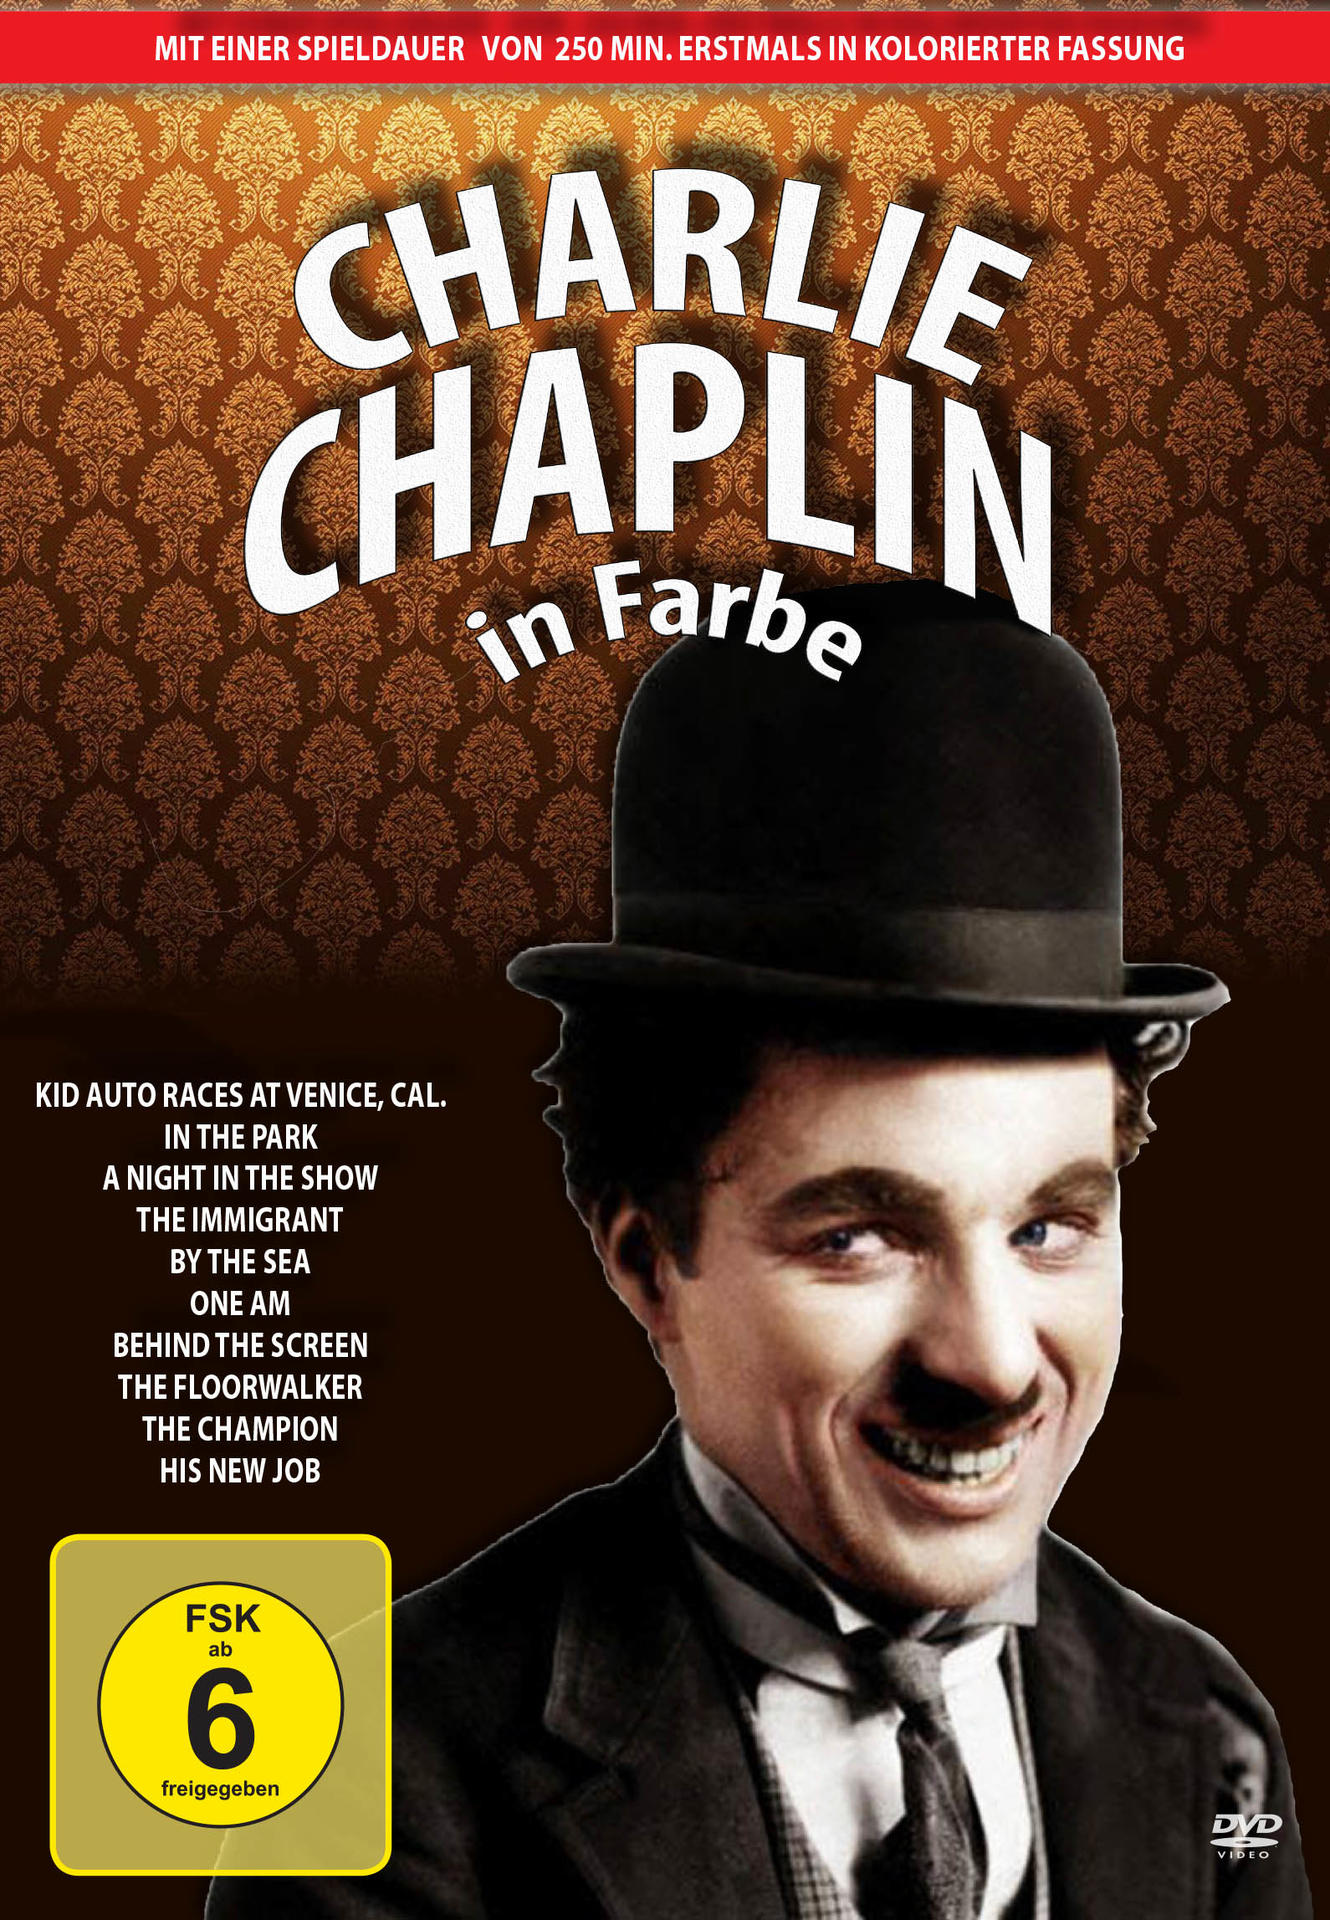 In Charlie Chaplin Farbe DVD